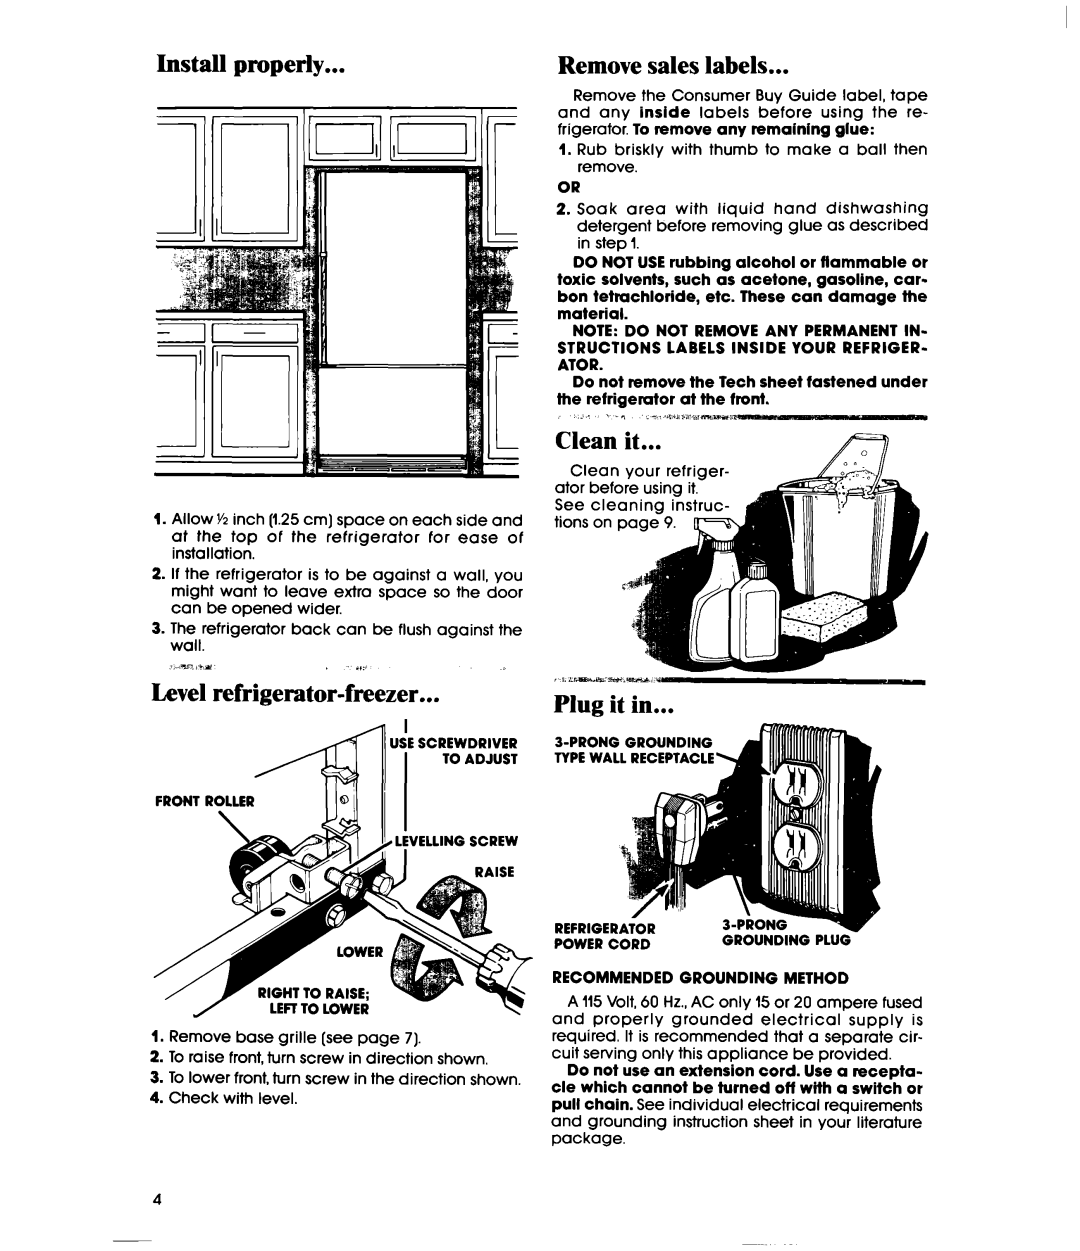 Whirlpool EBI9MK manual Install properly, Remove sales labels, Clean it, Level refrigerator-freezer, Plug it in 